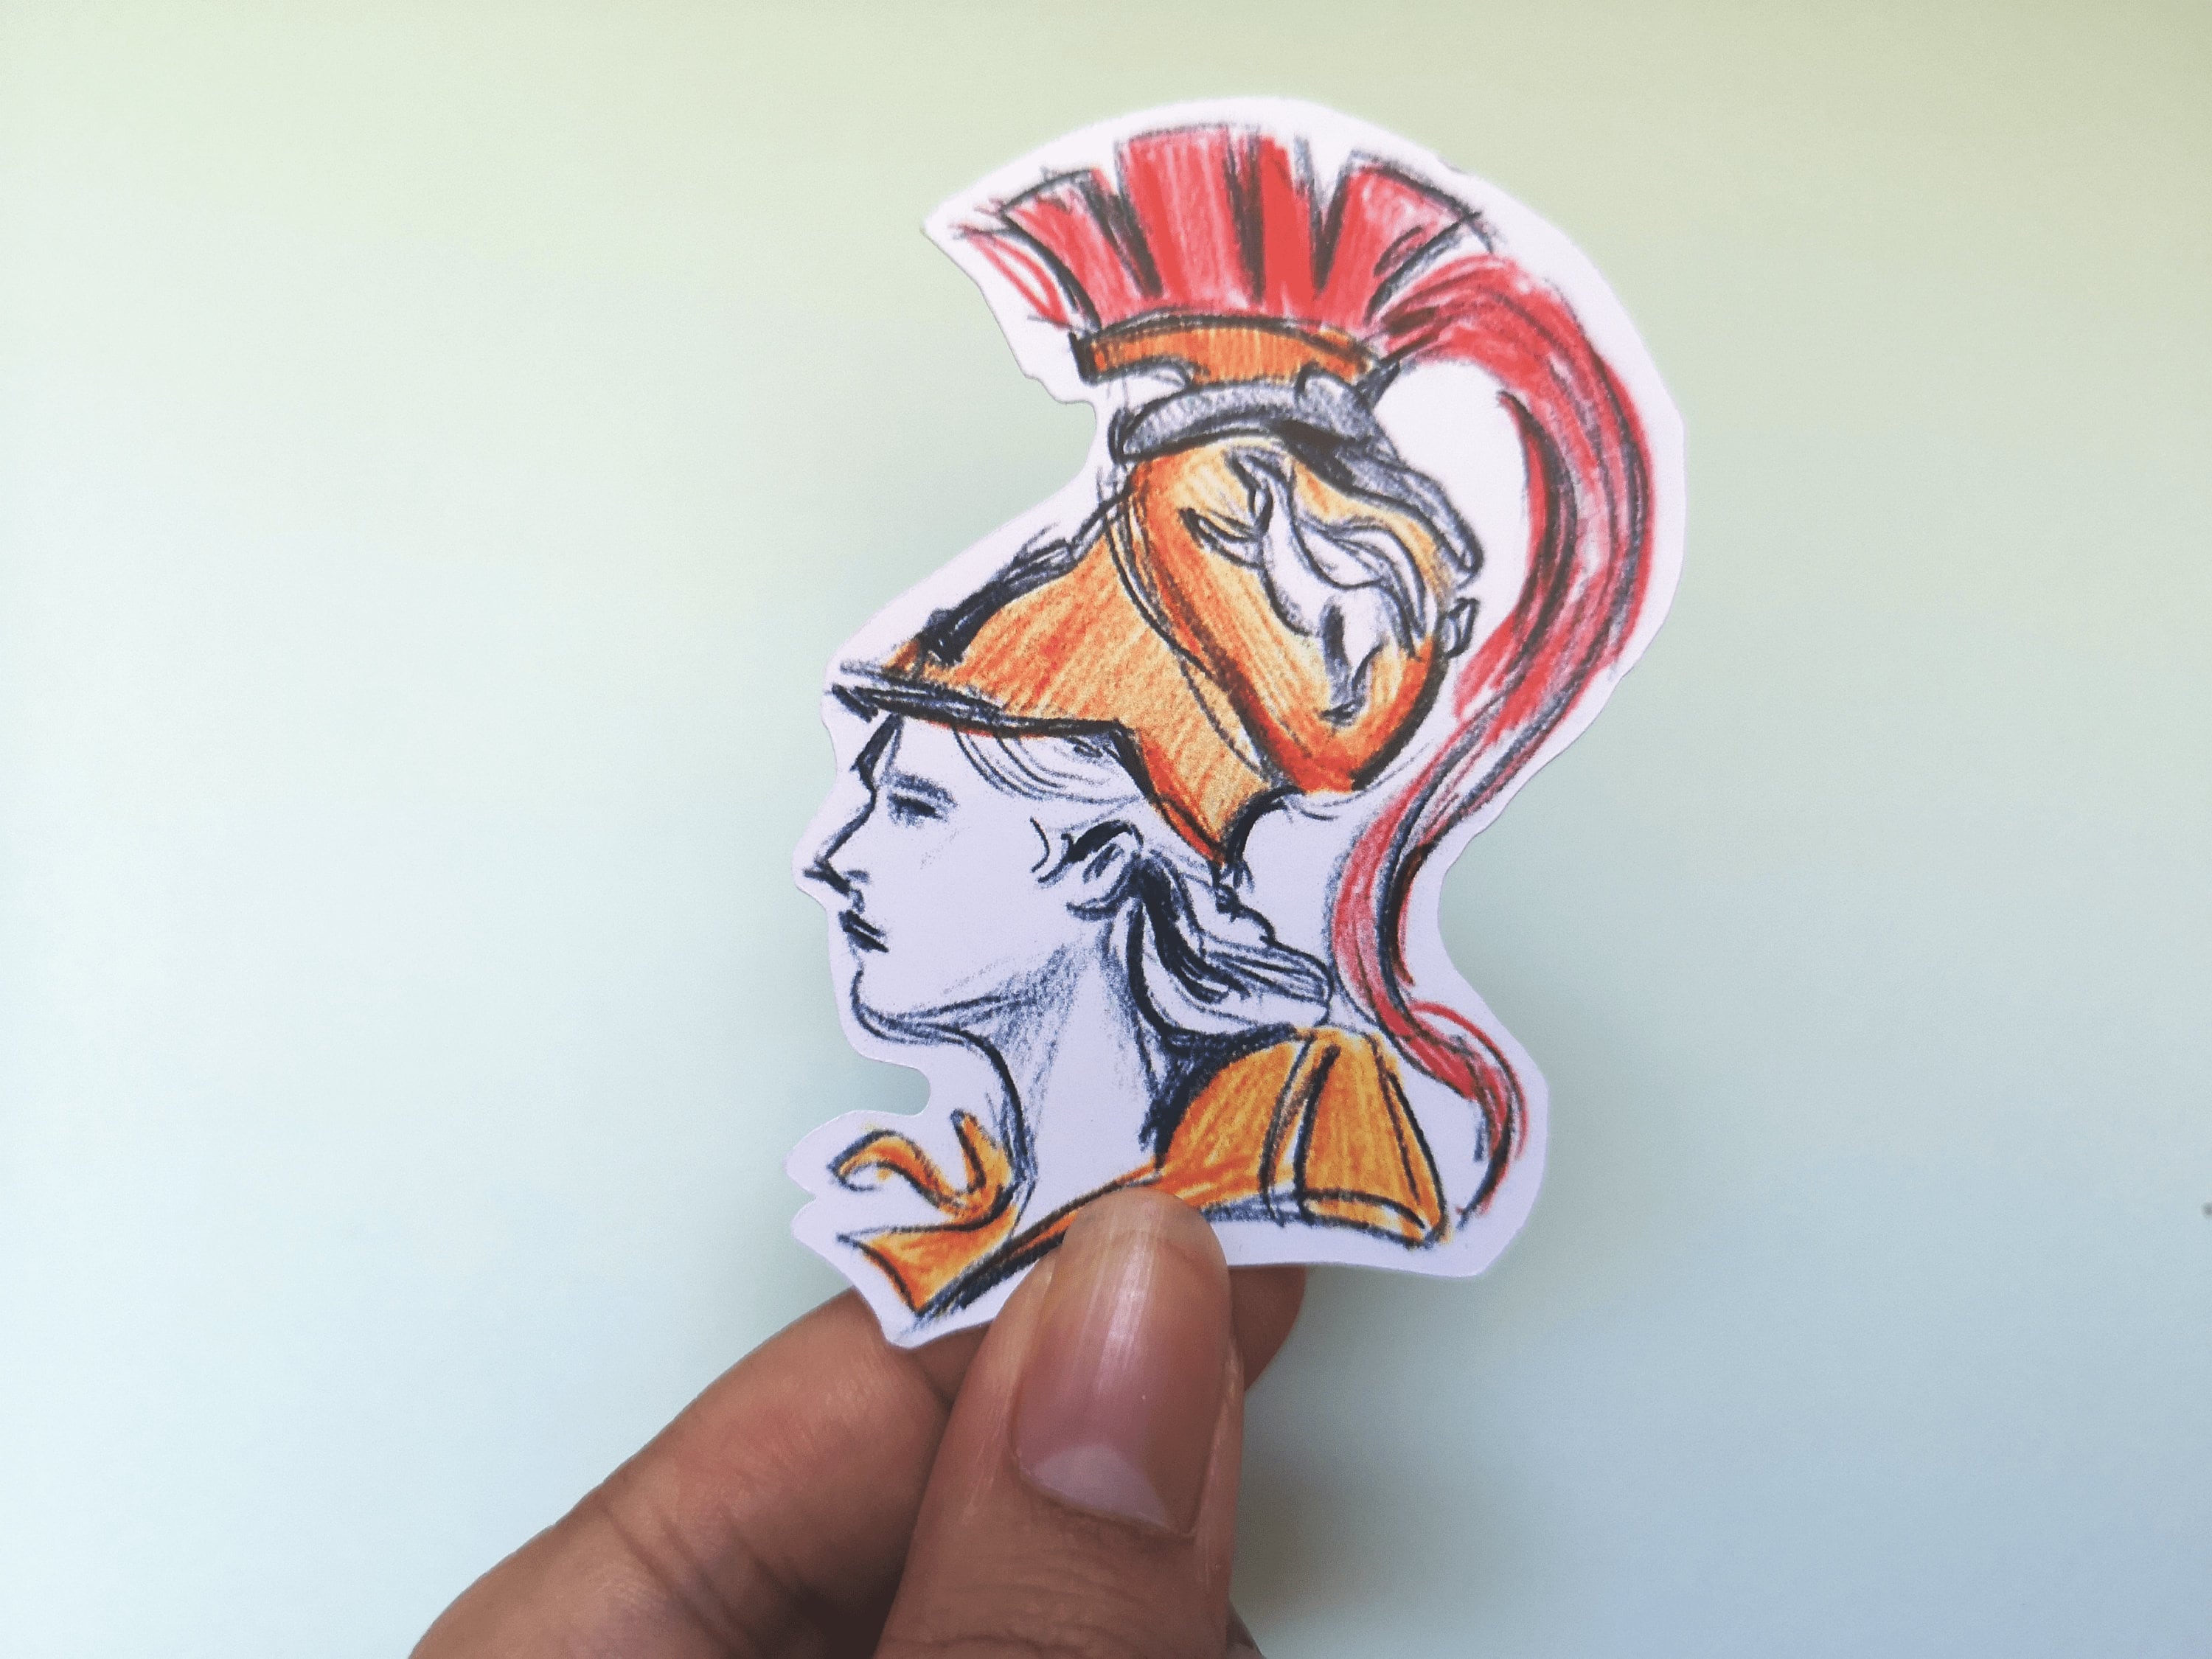 Athena Greek Goddess' Sticker